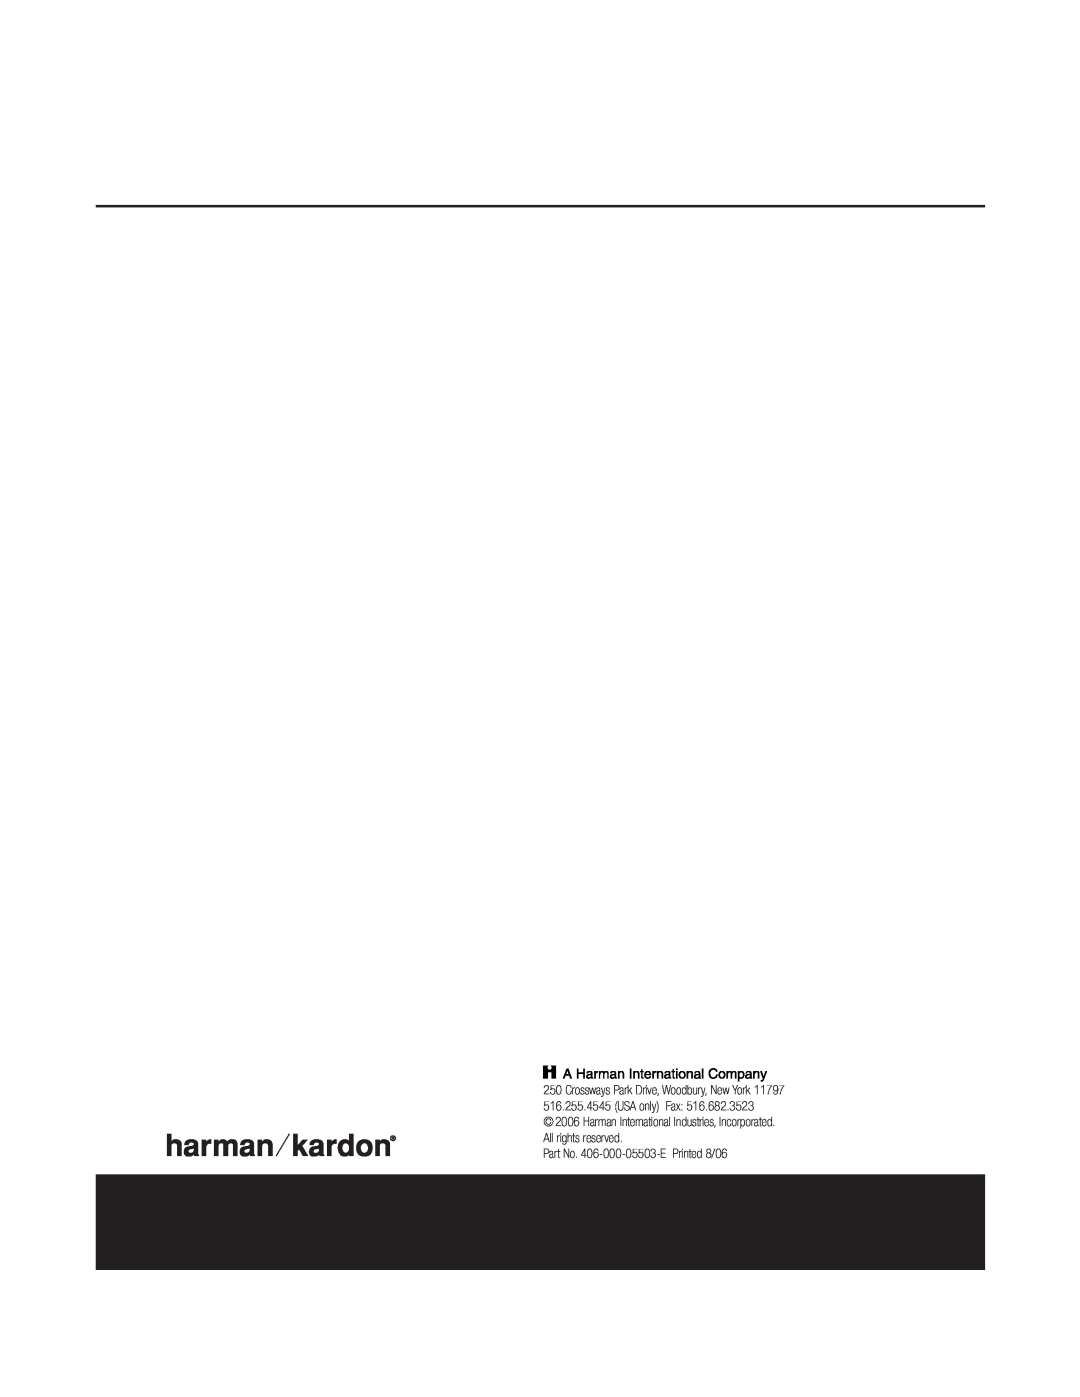 Harman-Kardon HKTS 15 owner manual Part No. 406-000-05503-EPrinted 8/06 